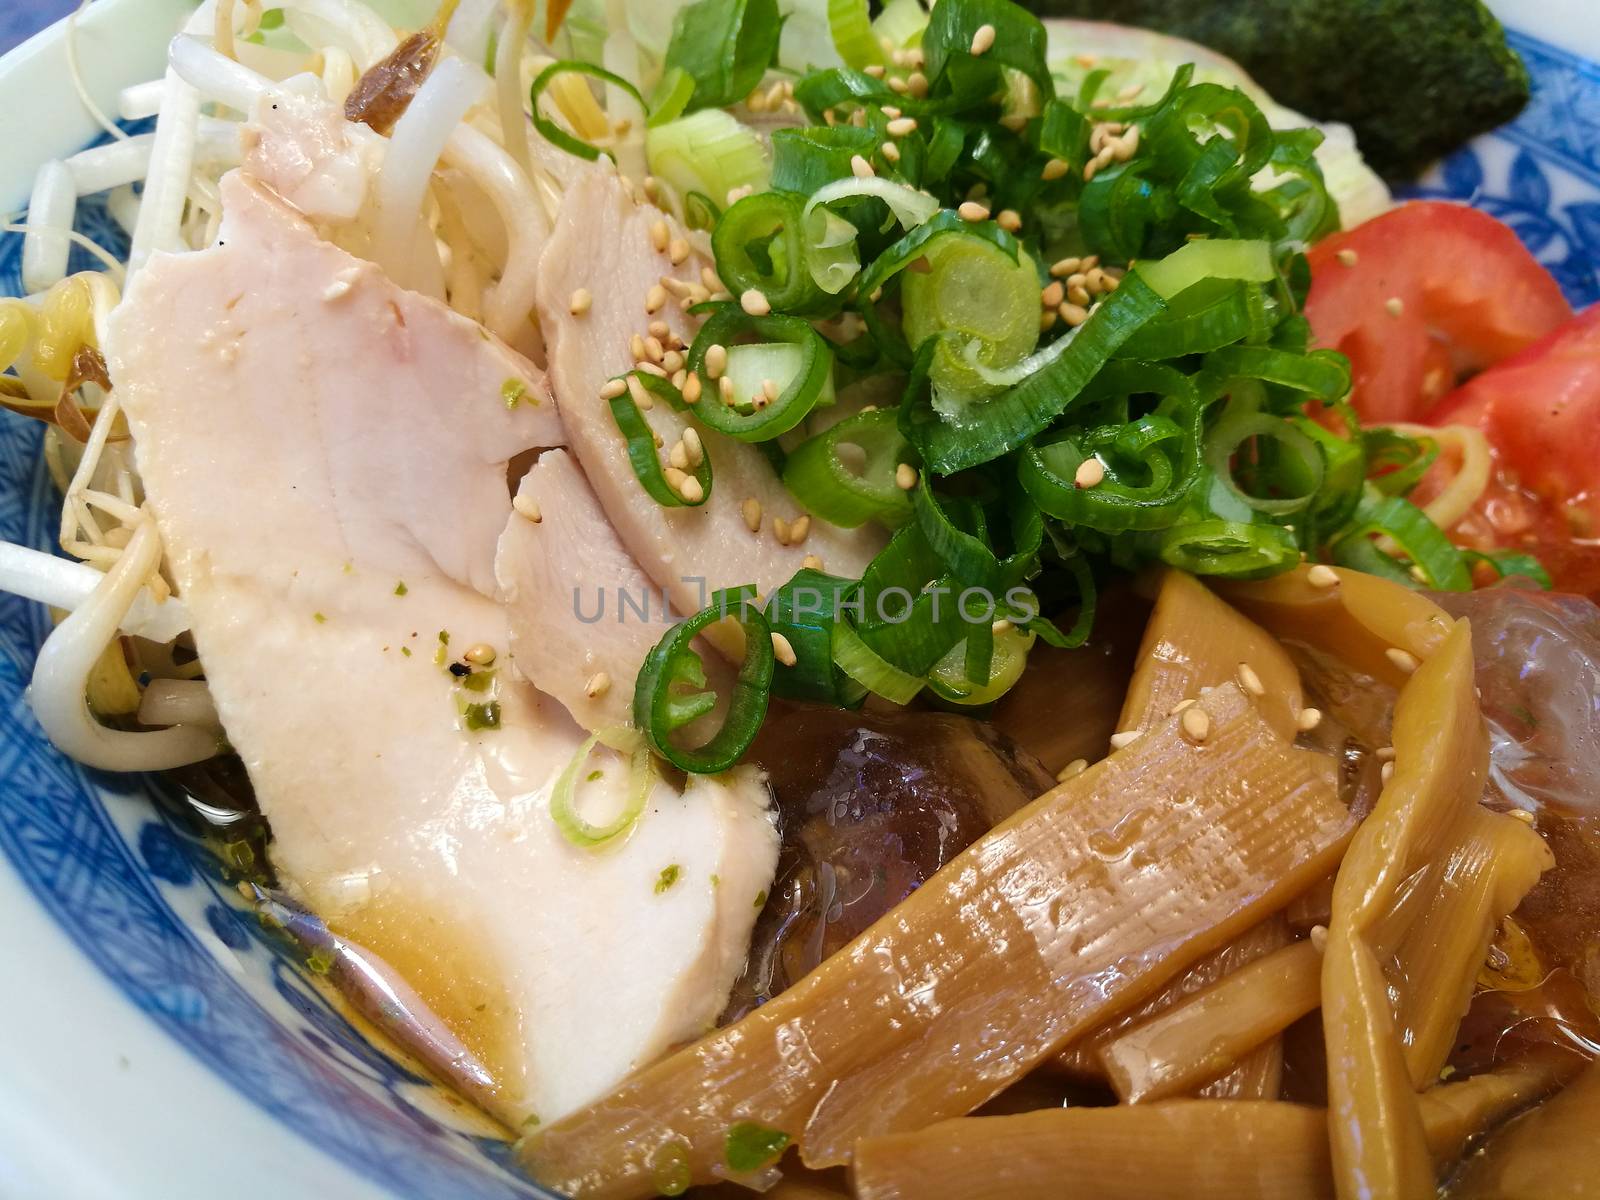 Japanese bukkakesoba buckwheat soba noodle soup served cold by eyeofpaul